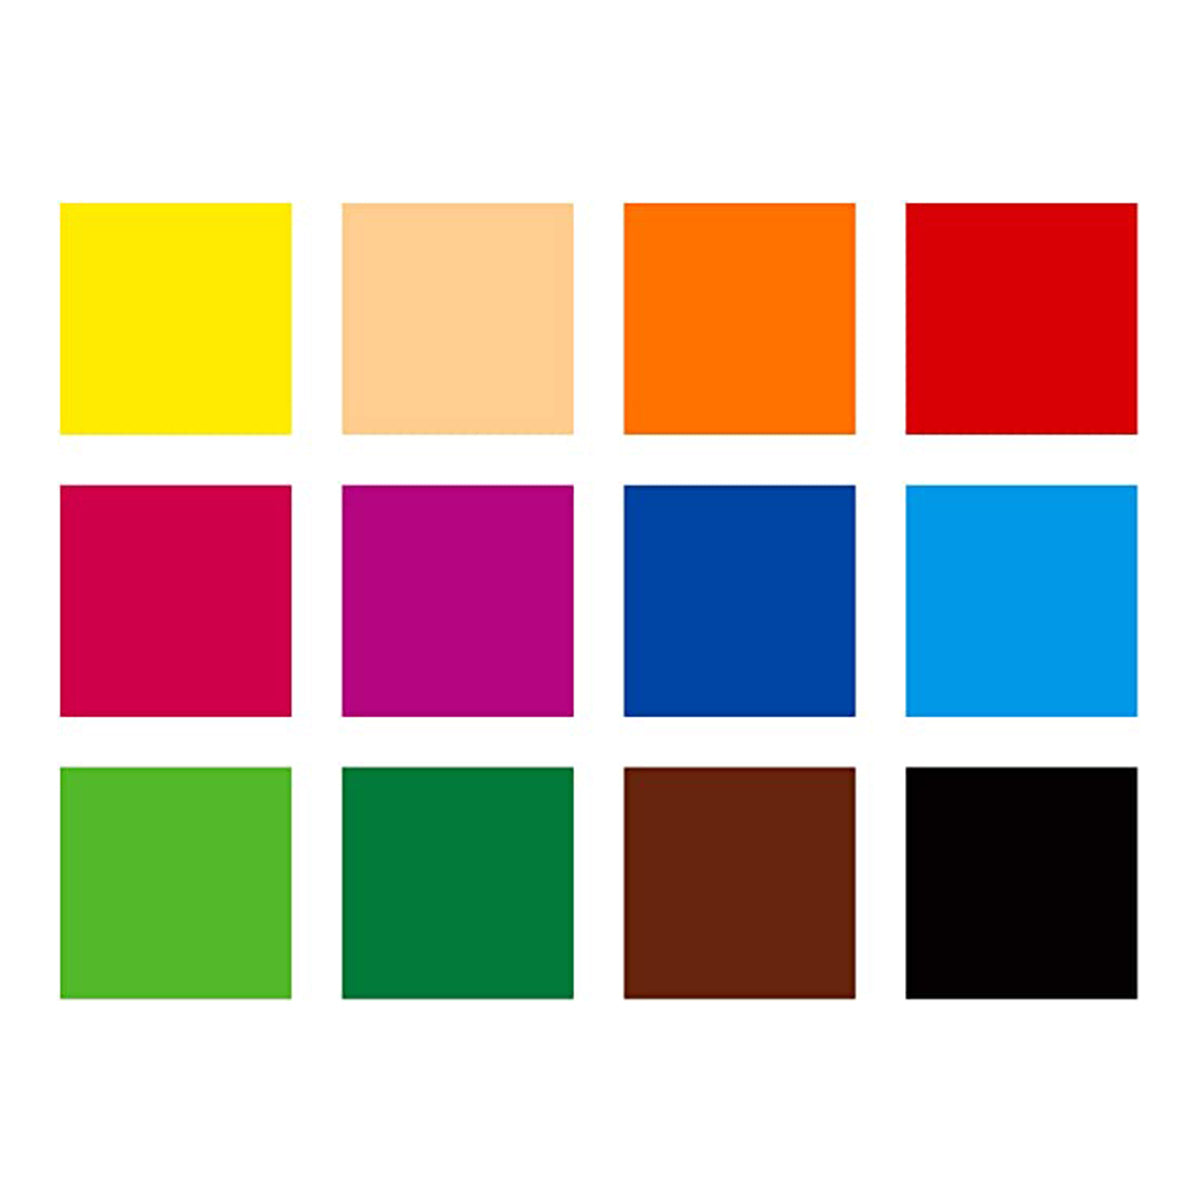 STAEDTLER Design Journey - Caja Metálica con 12 Lápices de Colores Acuarelables